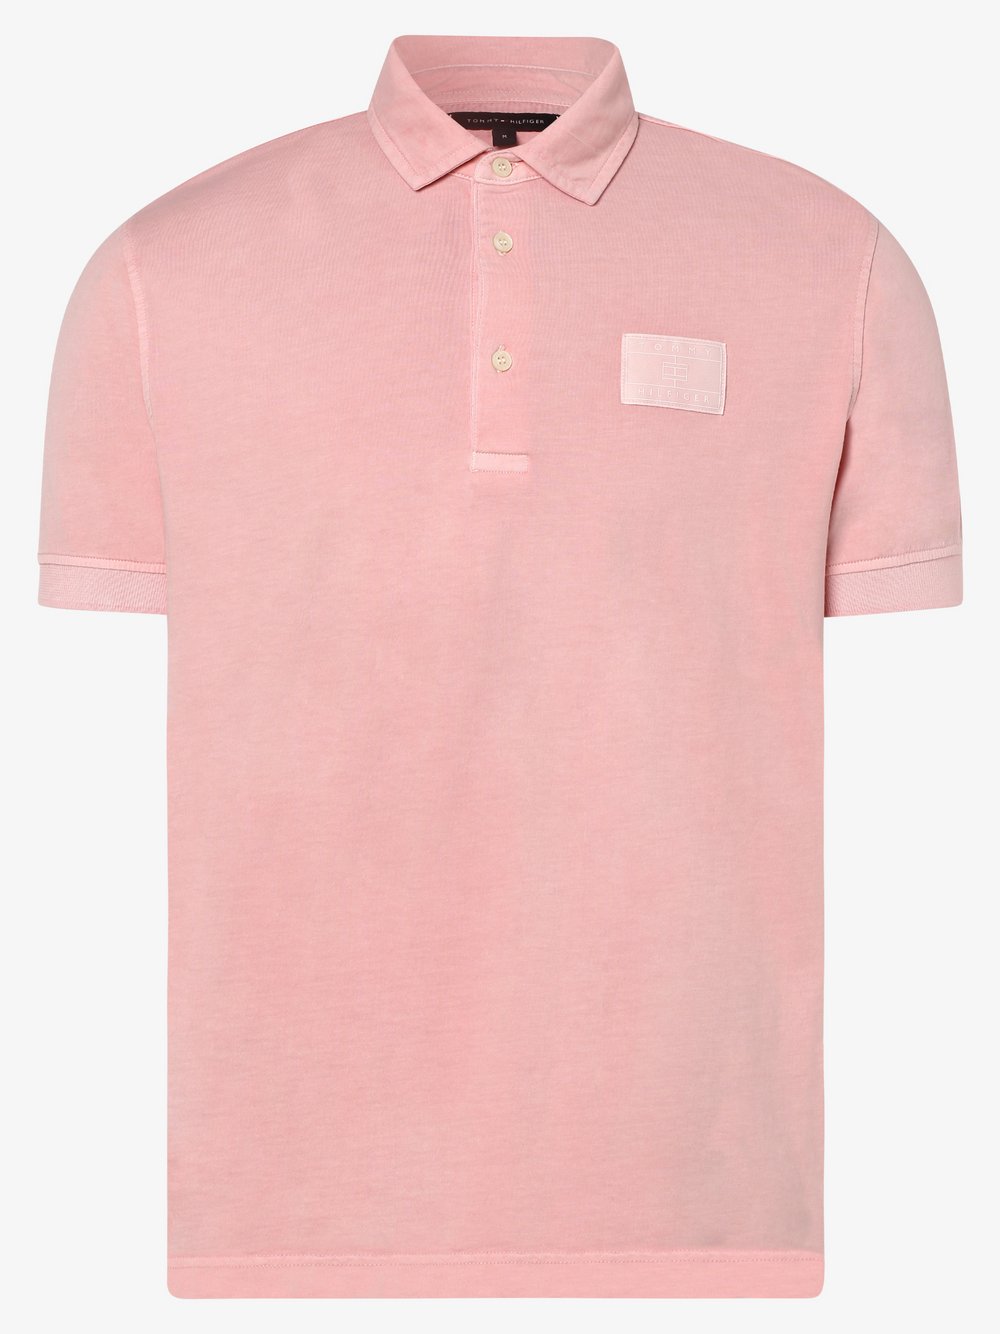 Tommy Hilfiger - Męska koszulka polo, różowy